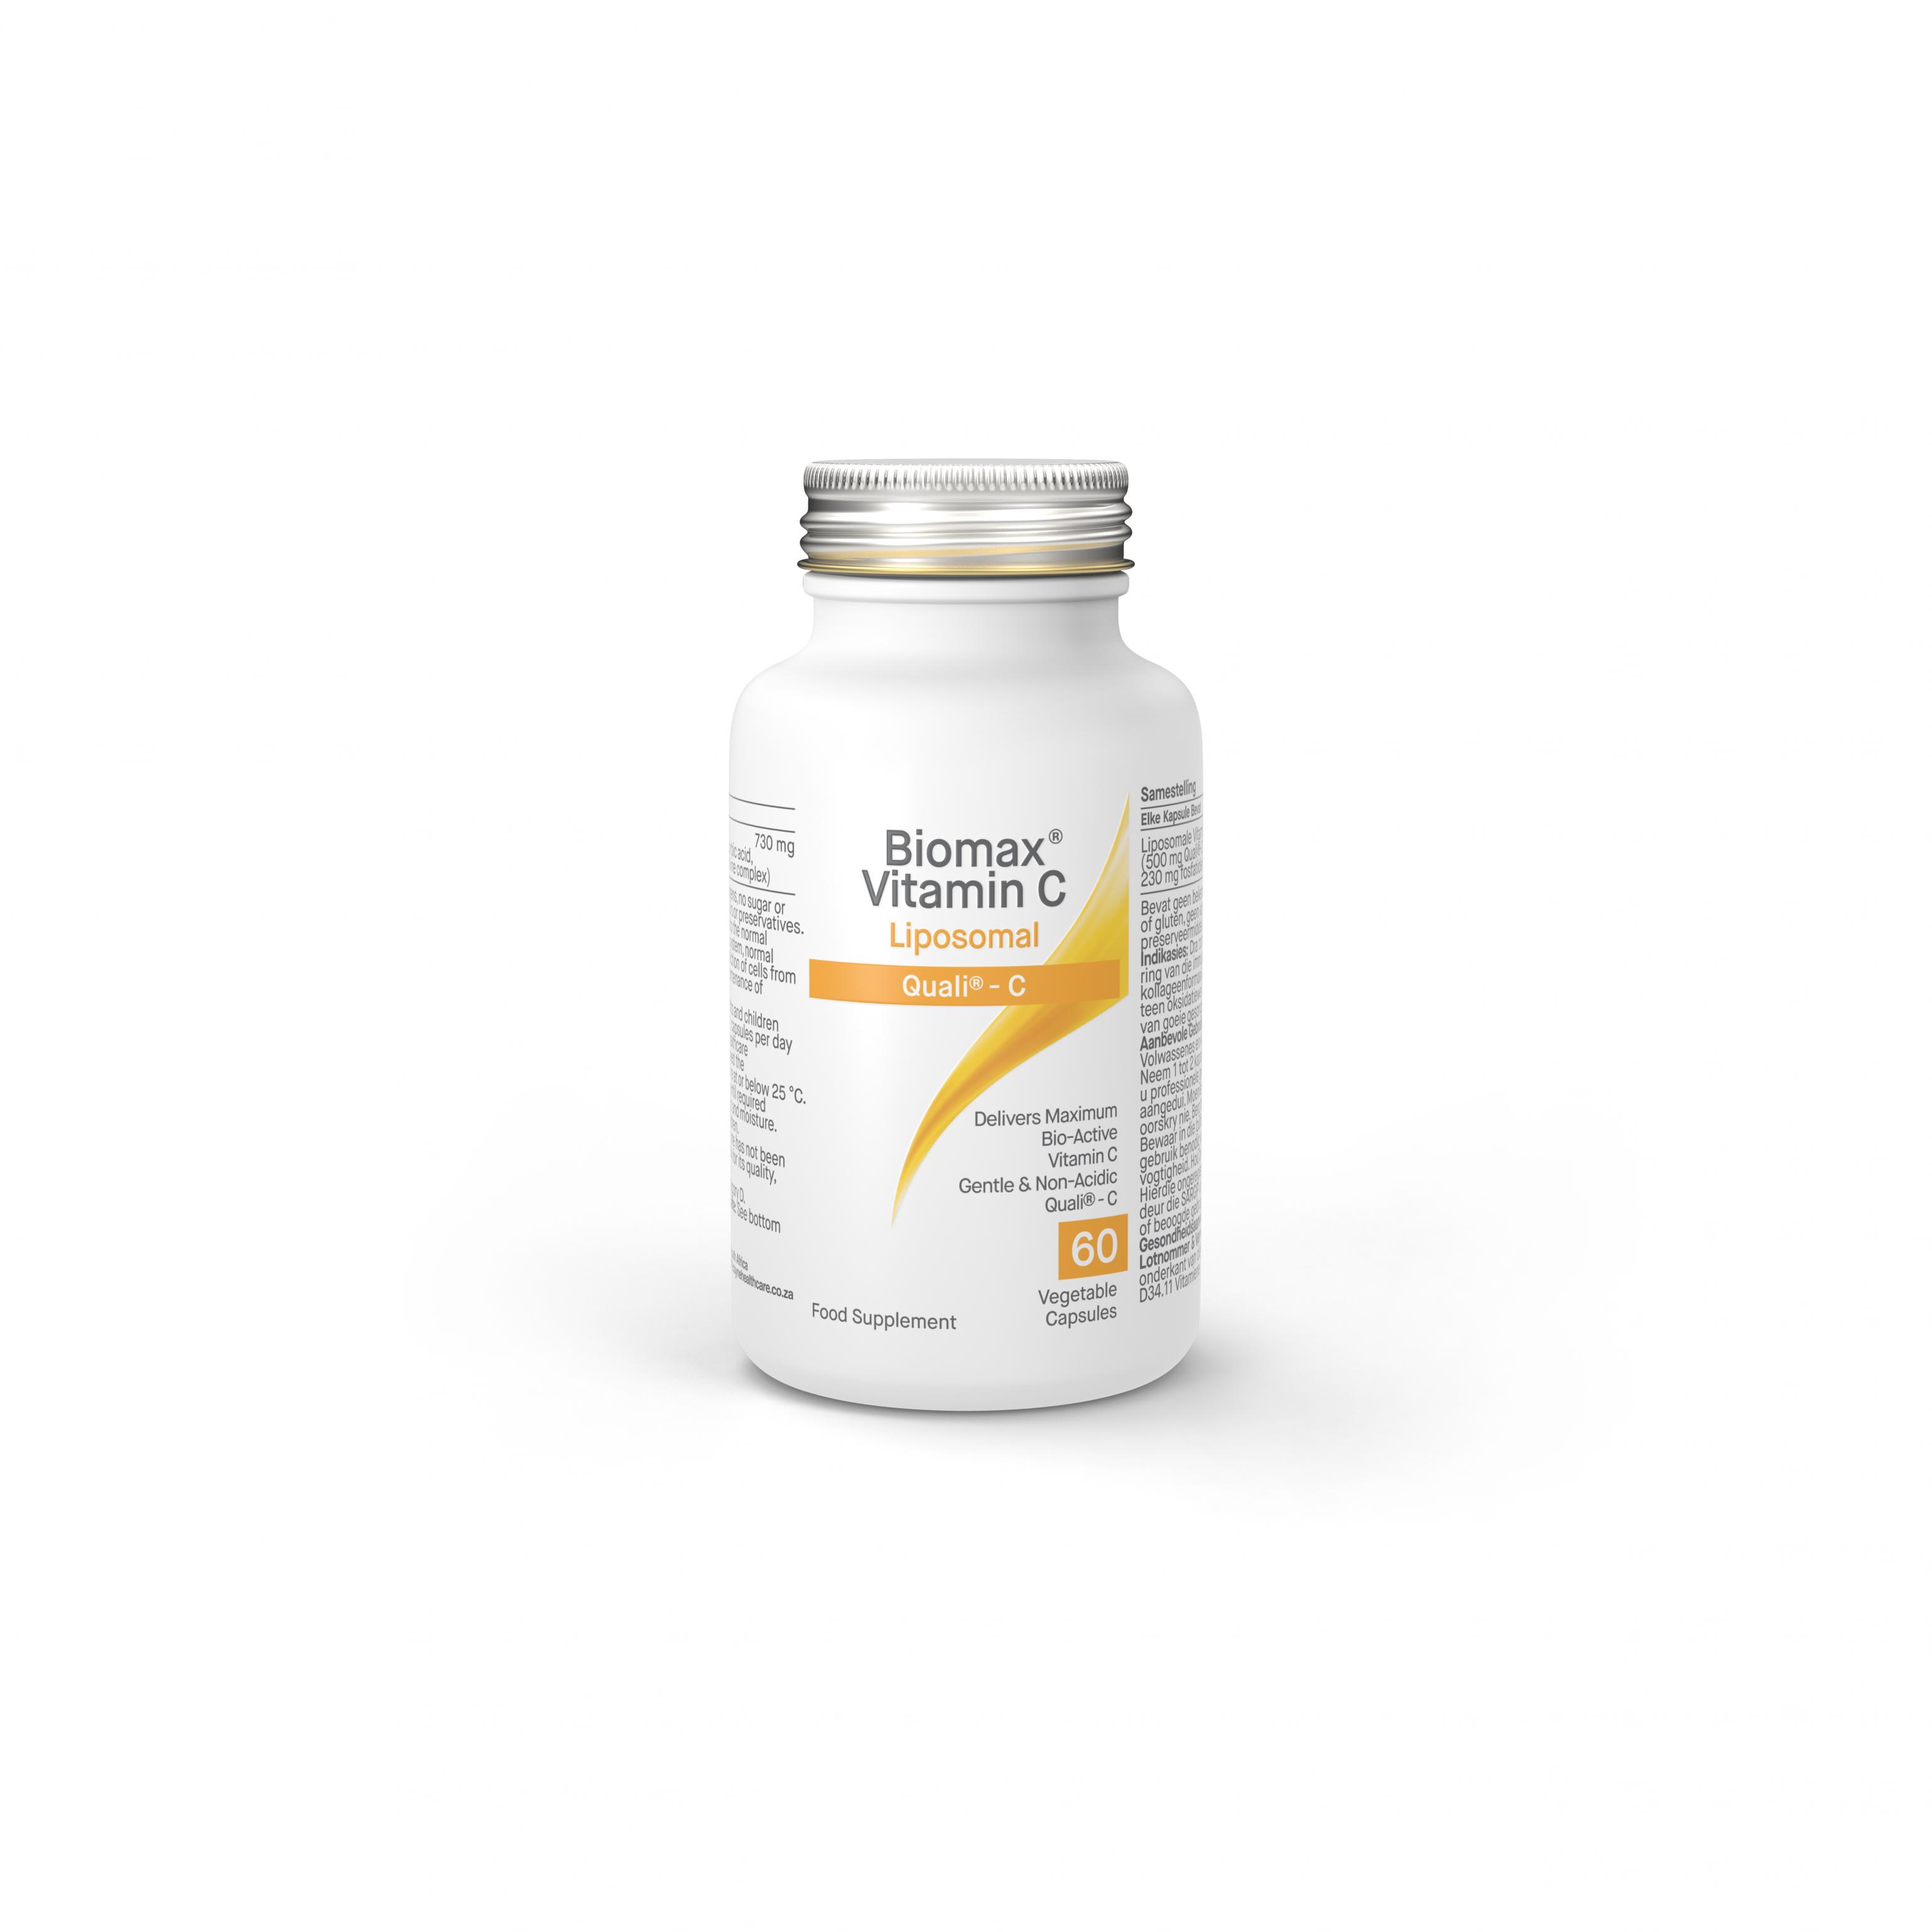 Biomax Vitamin C Liposomal Quali-C 60's